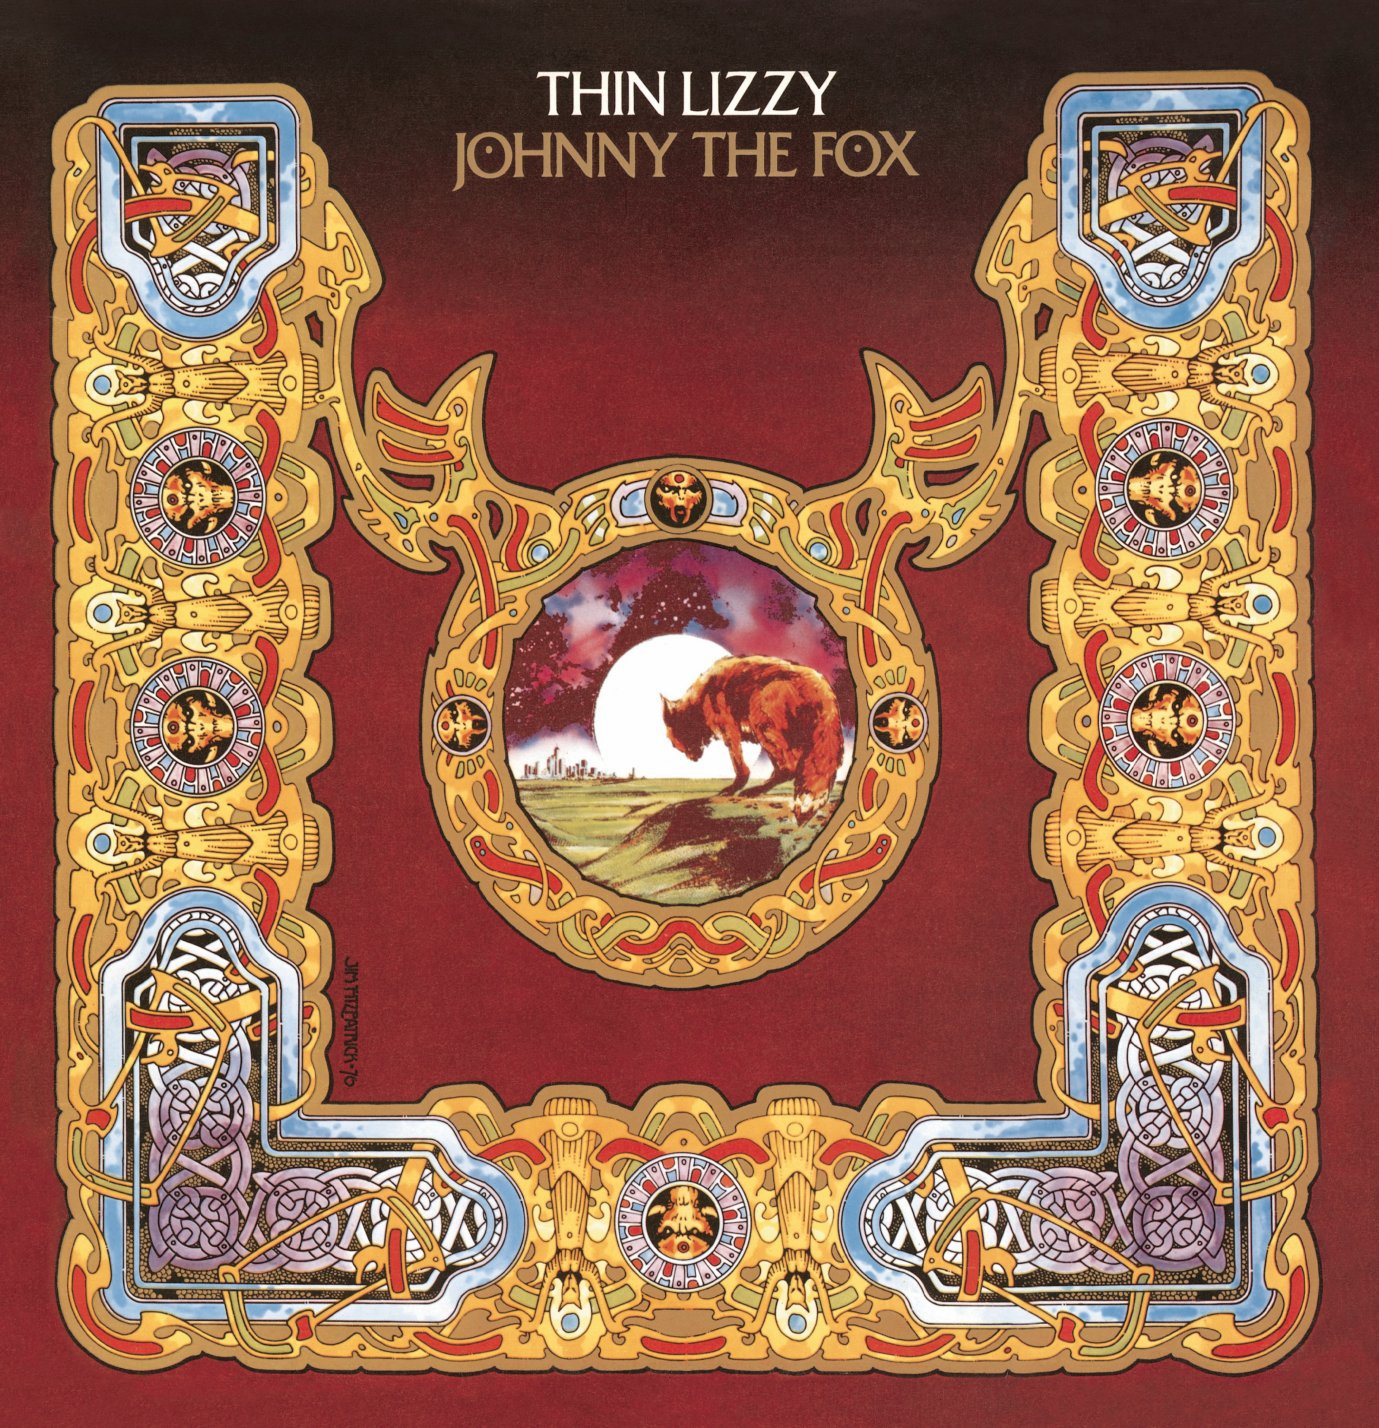 THIN LIZZY - JOHNNY THE FOX - VINYL LP - Wah Wah Records